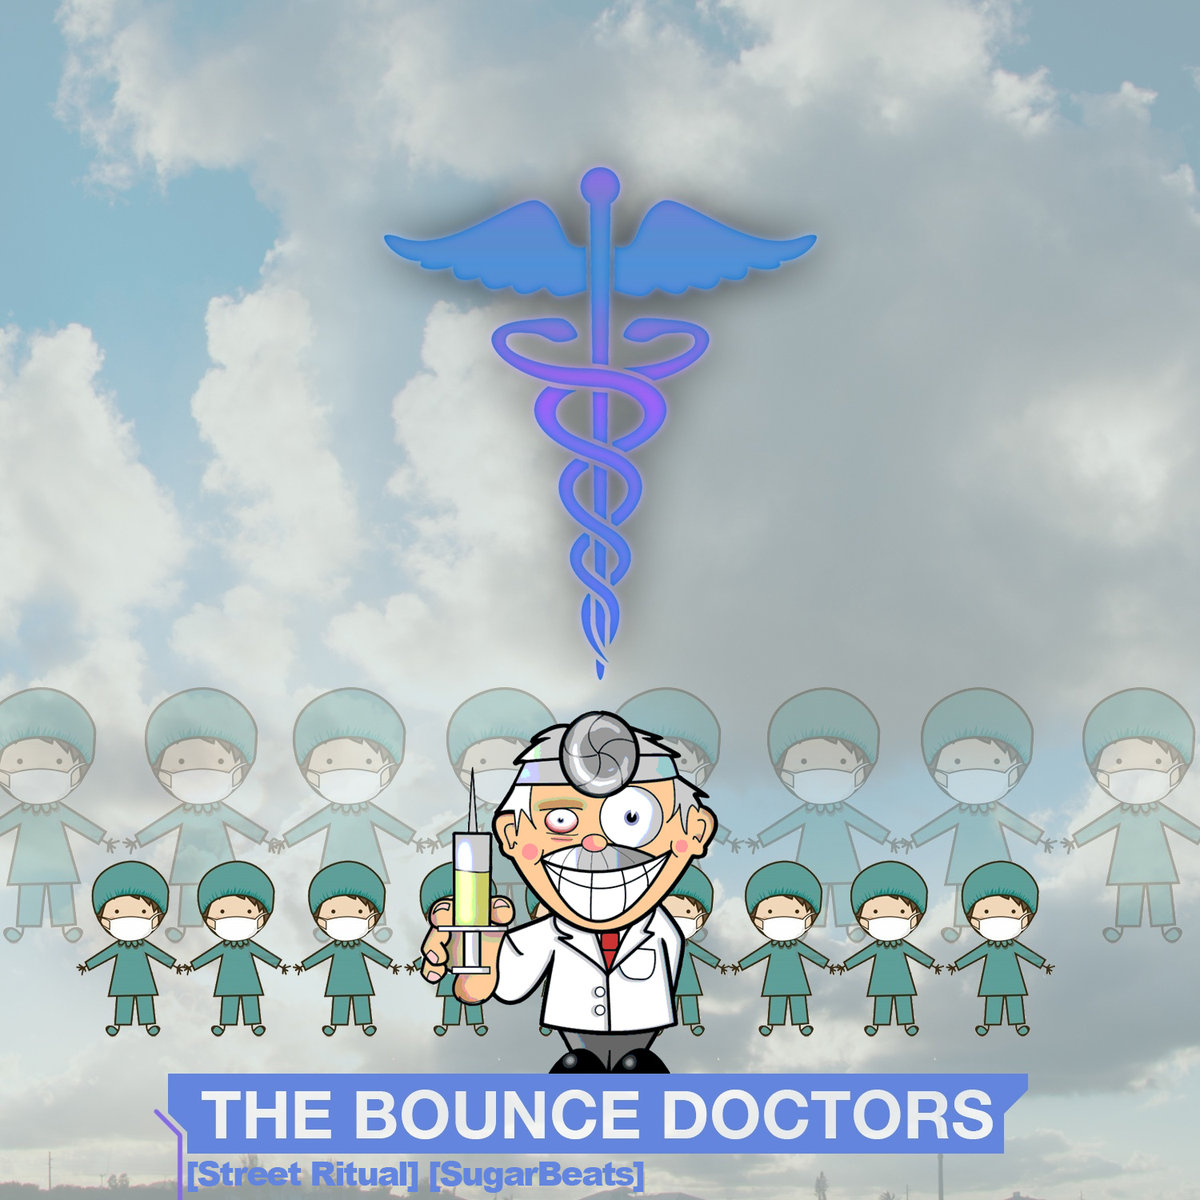 SugarBeats - Nickles (Mr. Bill Re-Interpretation) @ 'The Bounce Doctors' album (bass, chillstep)